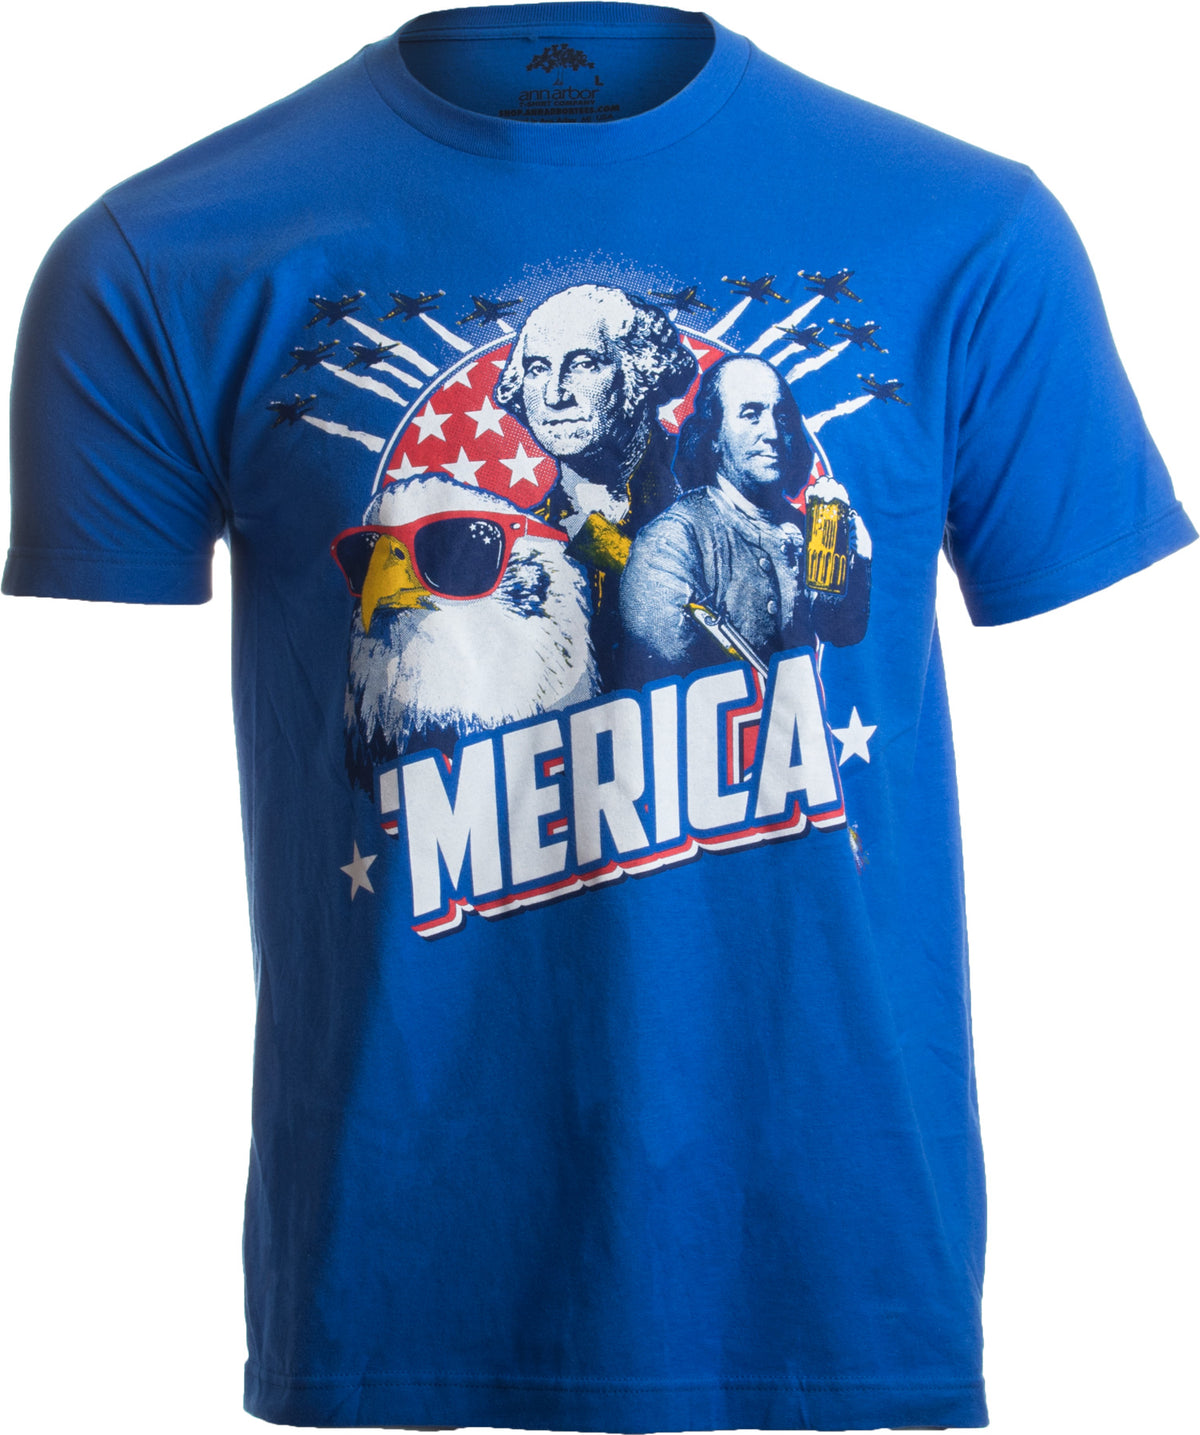 MERICA | Epic USA Patriotic American Party Patriot Unisex T-shirt Men Women